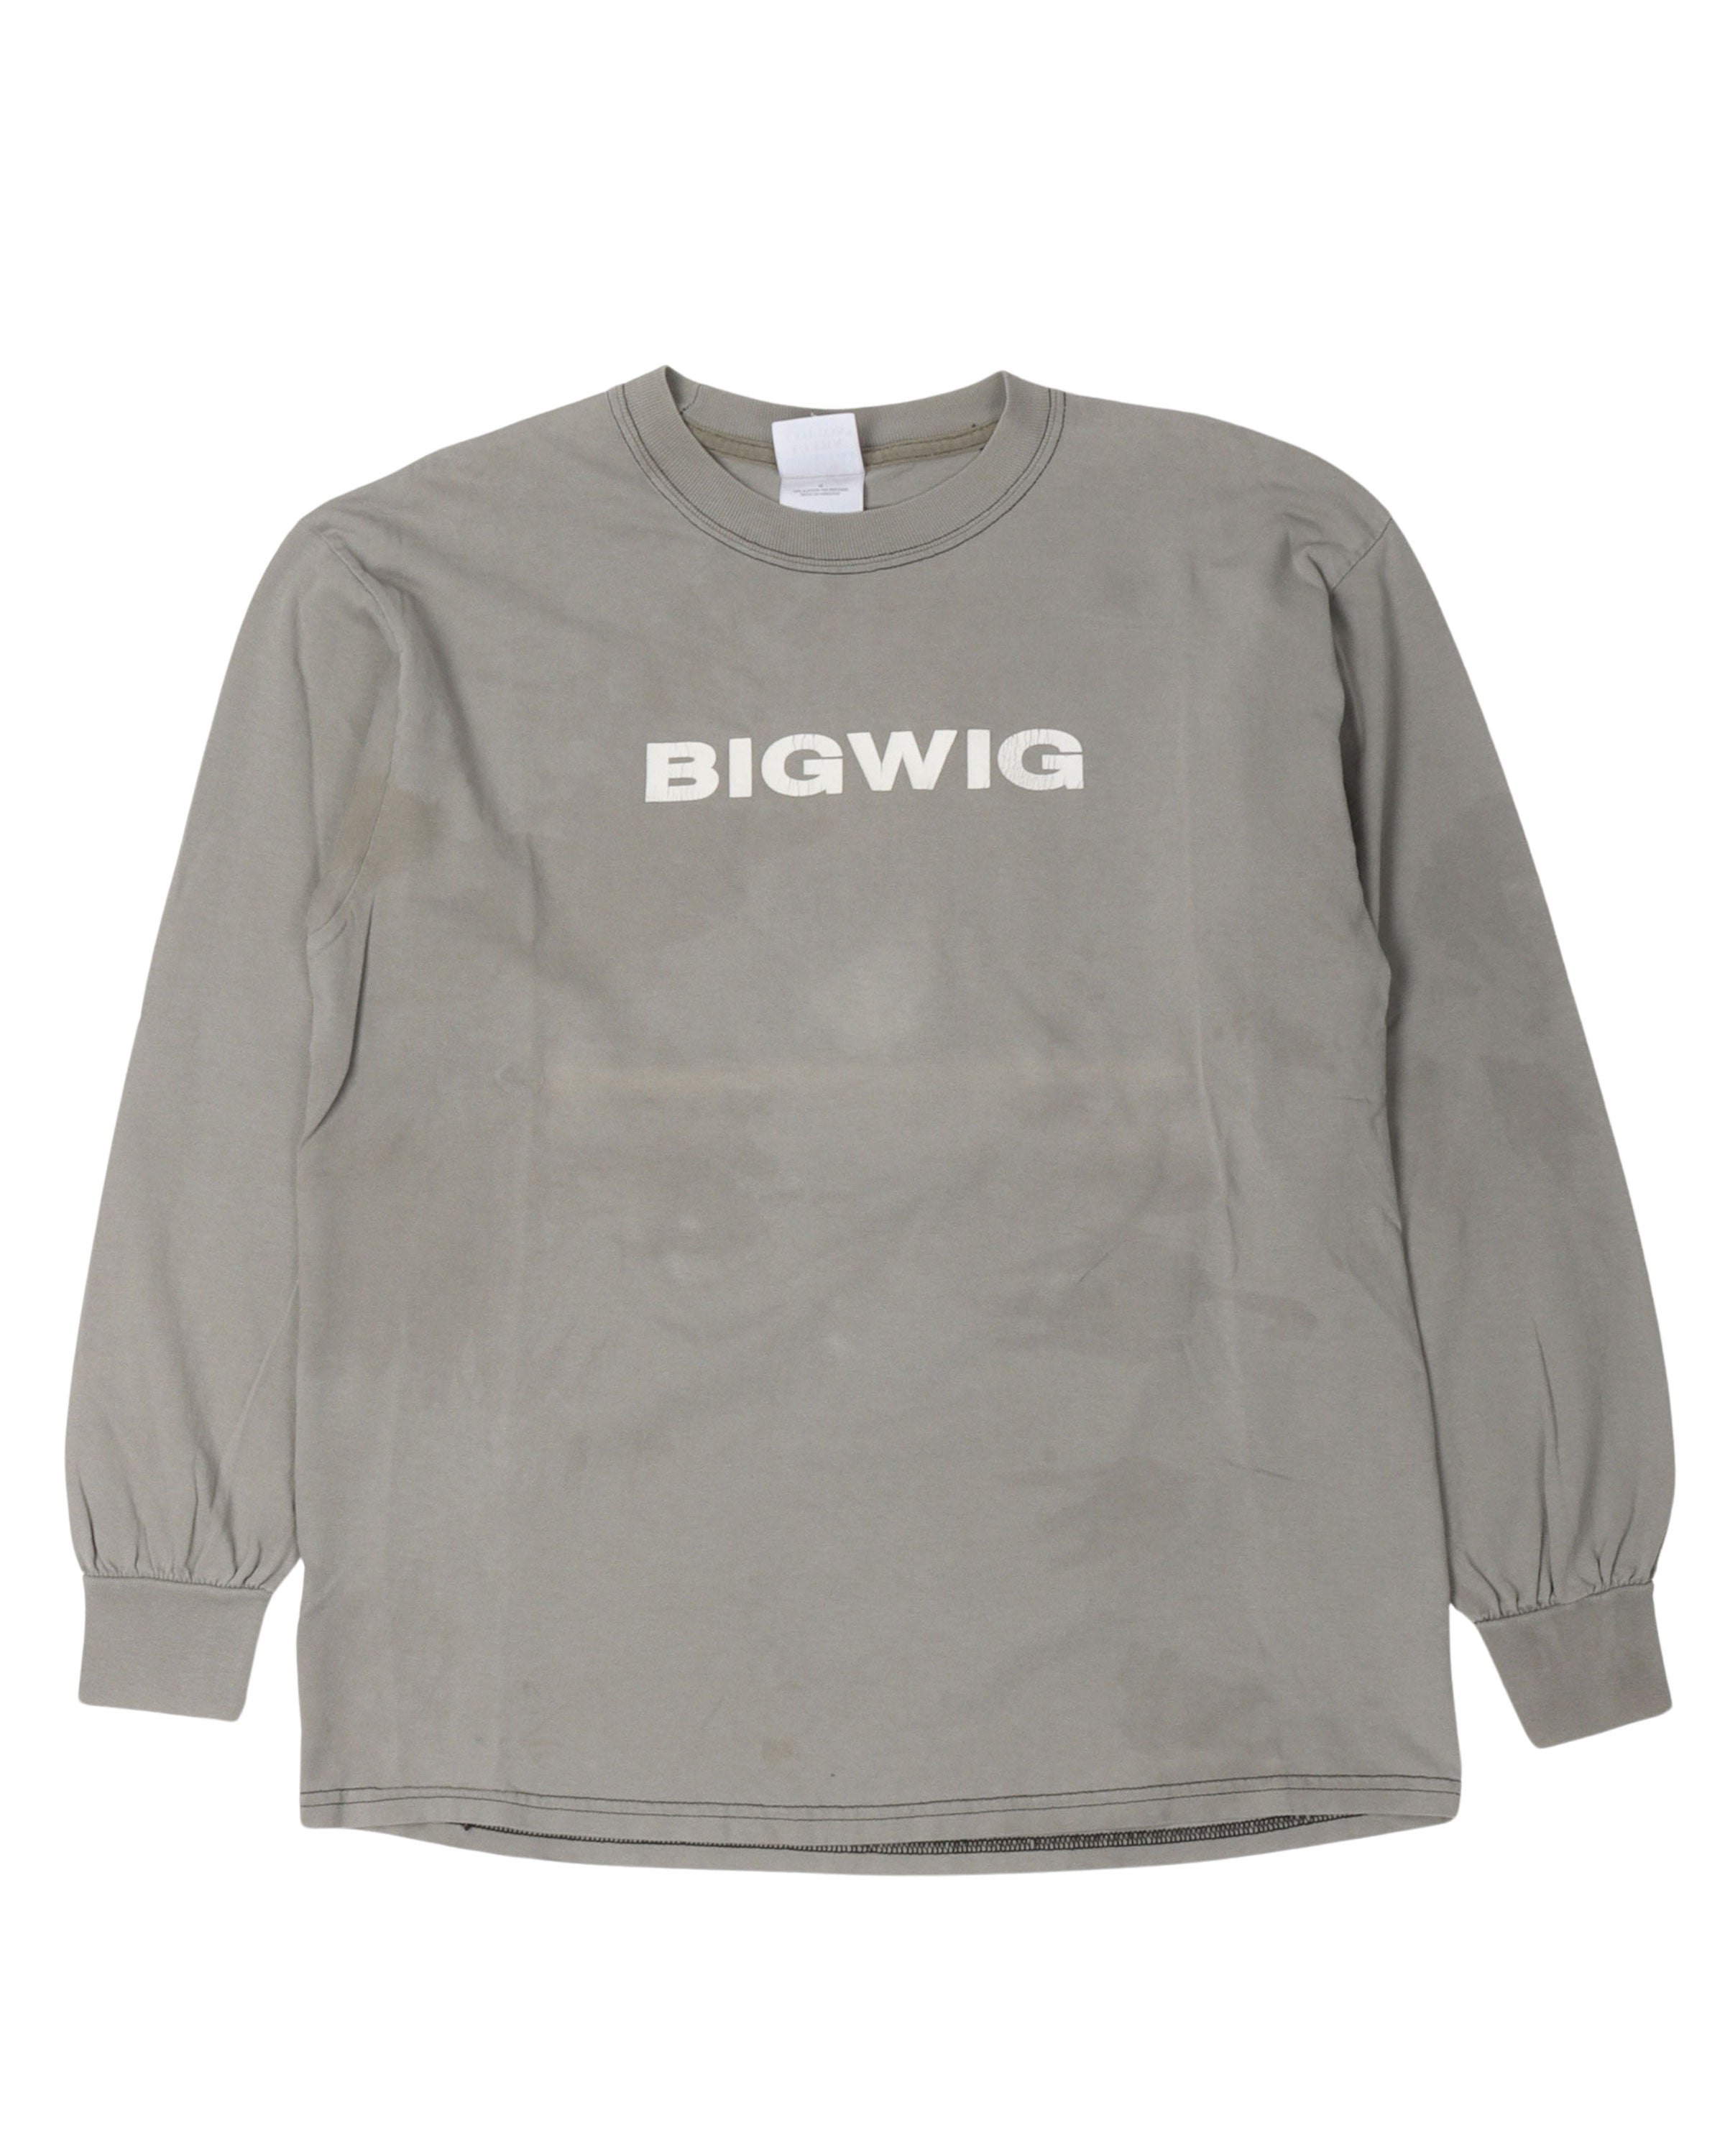 Bigwig Long-Sleeve T-Shirt